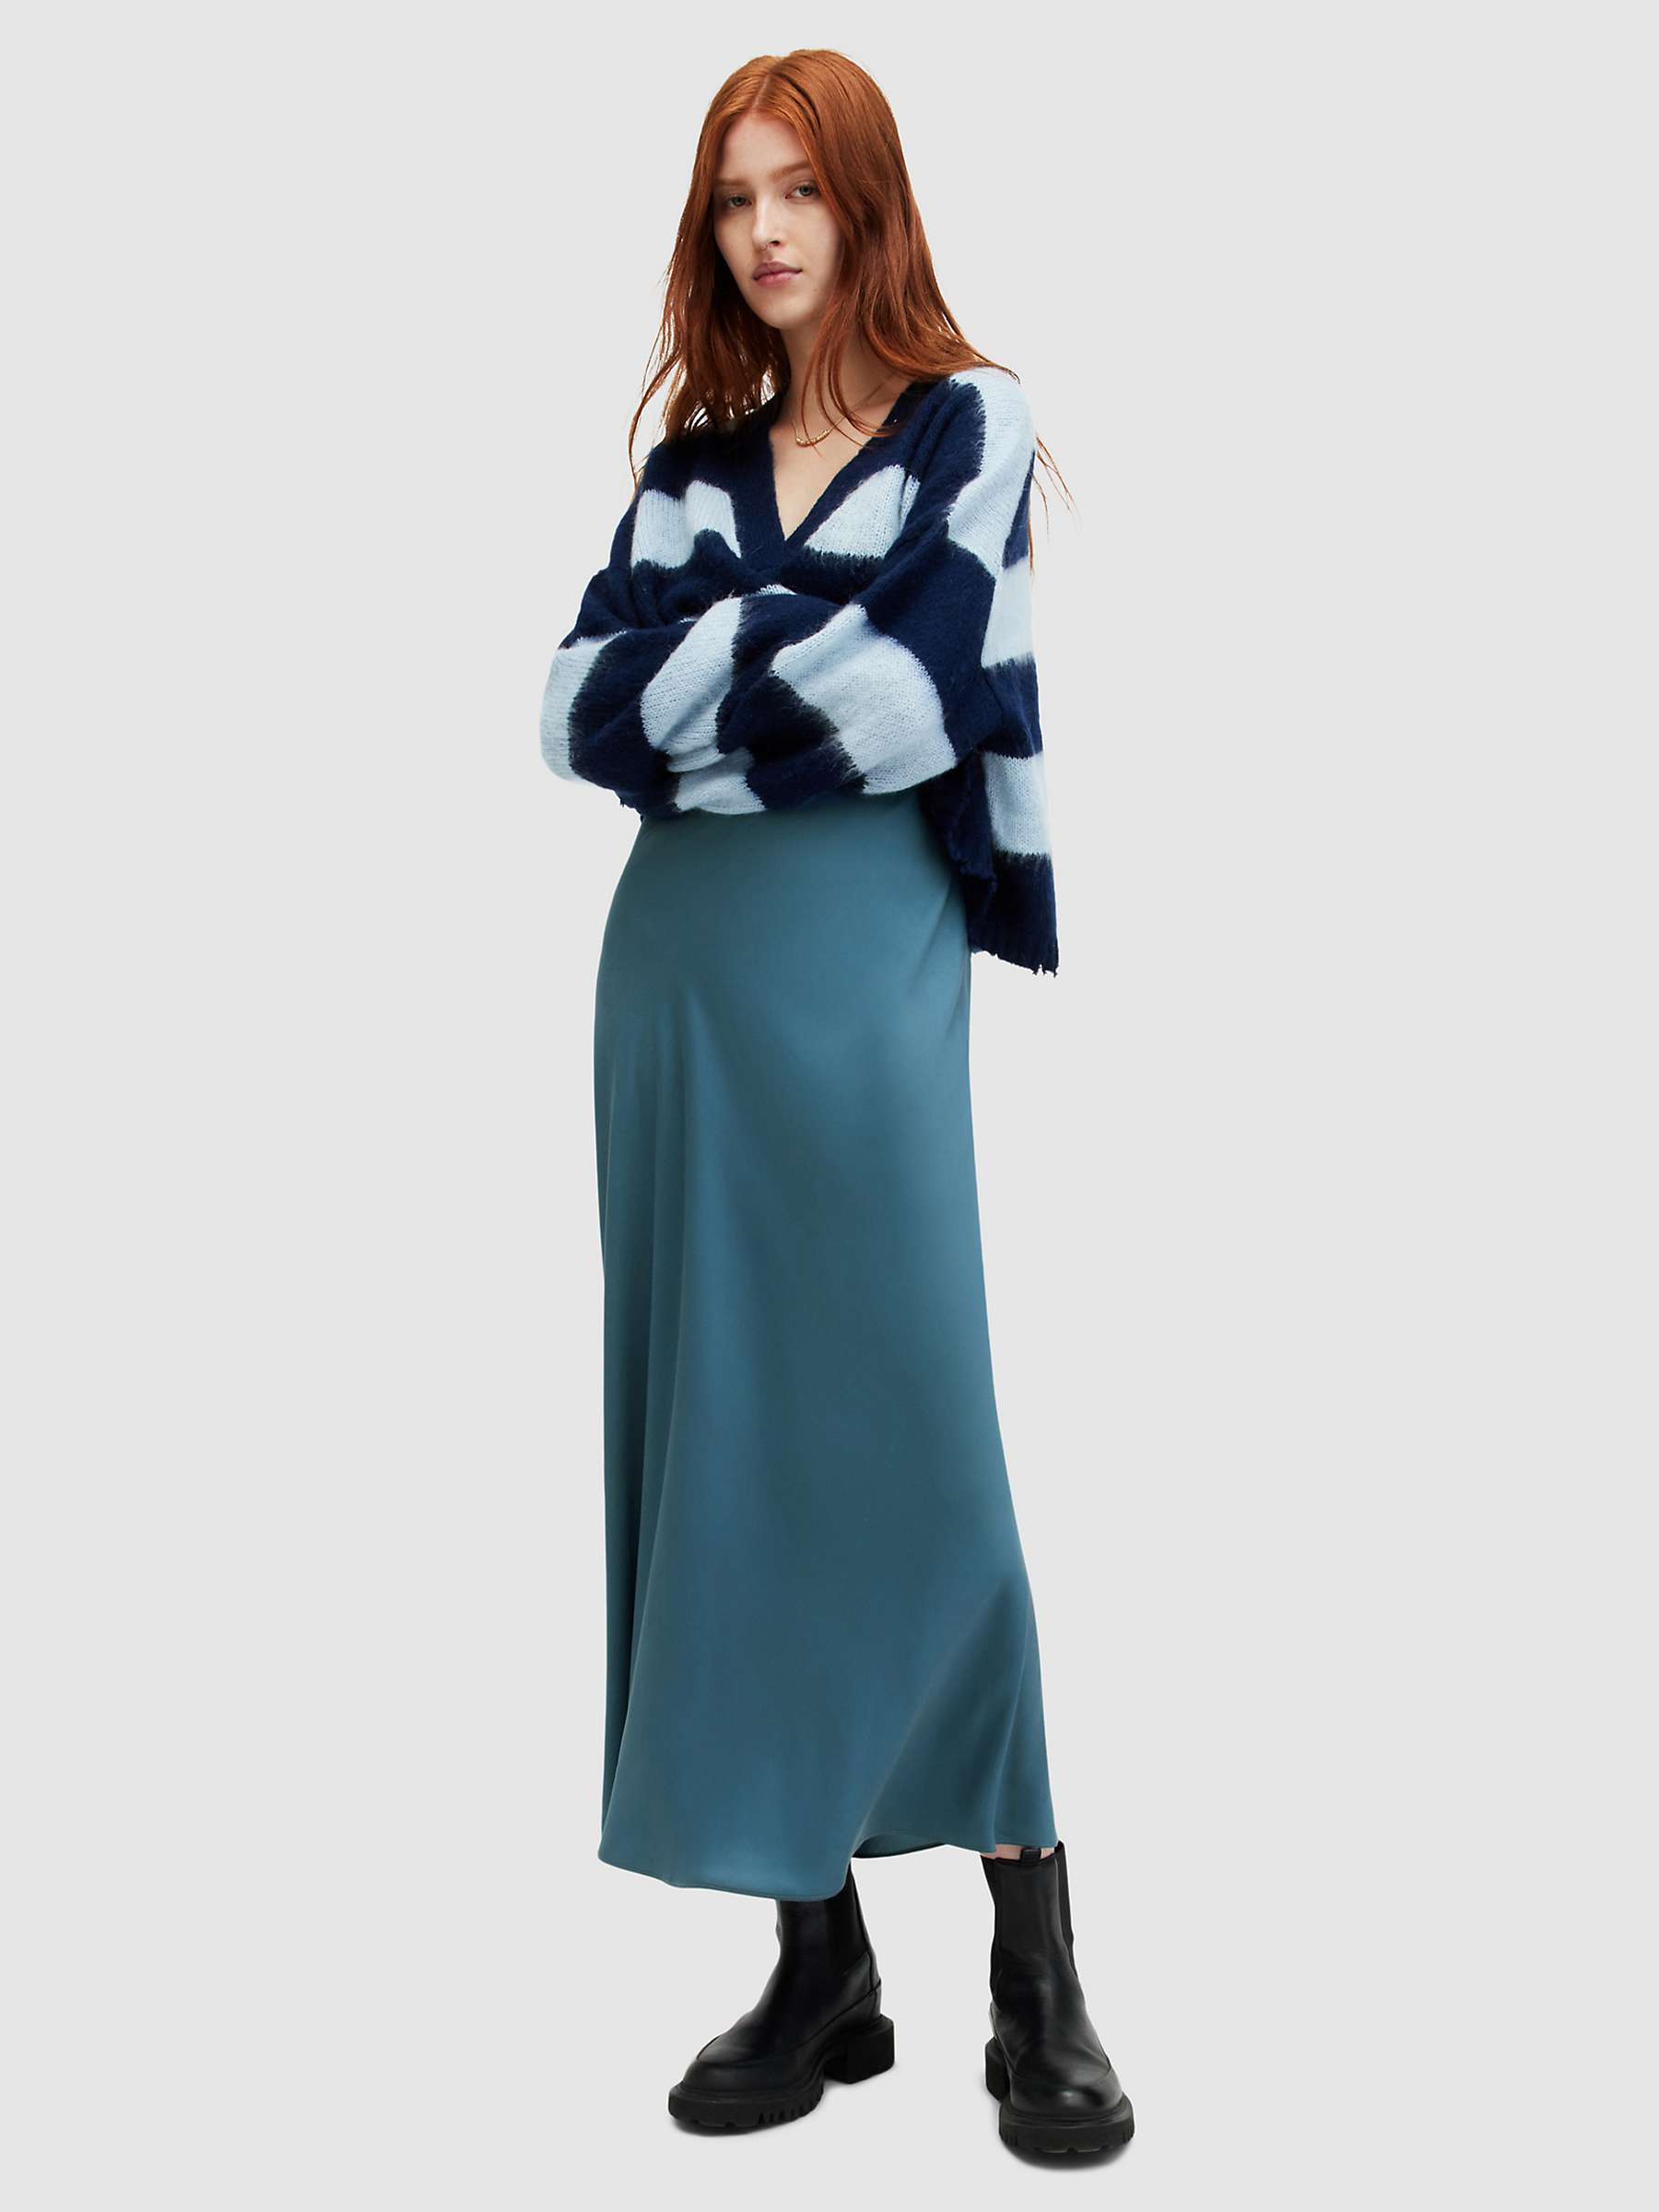 Buy AllSaints Bryony Sleeveless Midi Dress Online at johnlewis.com